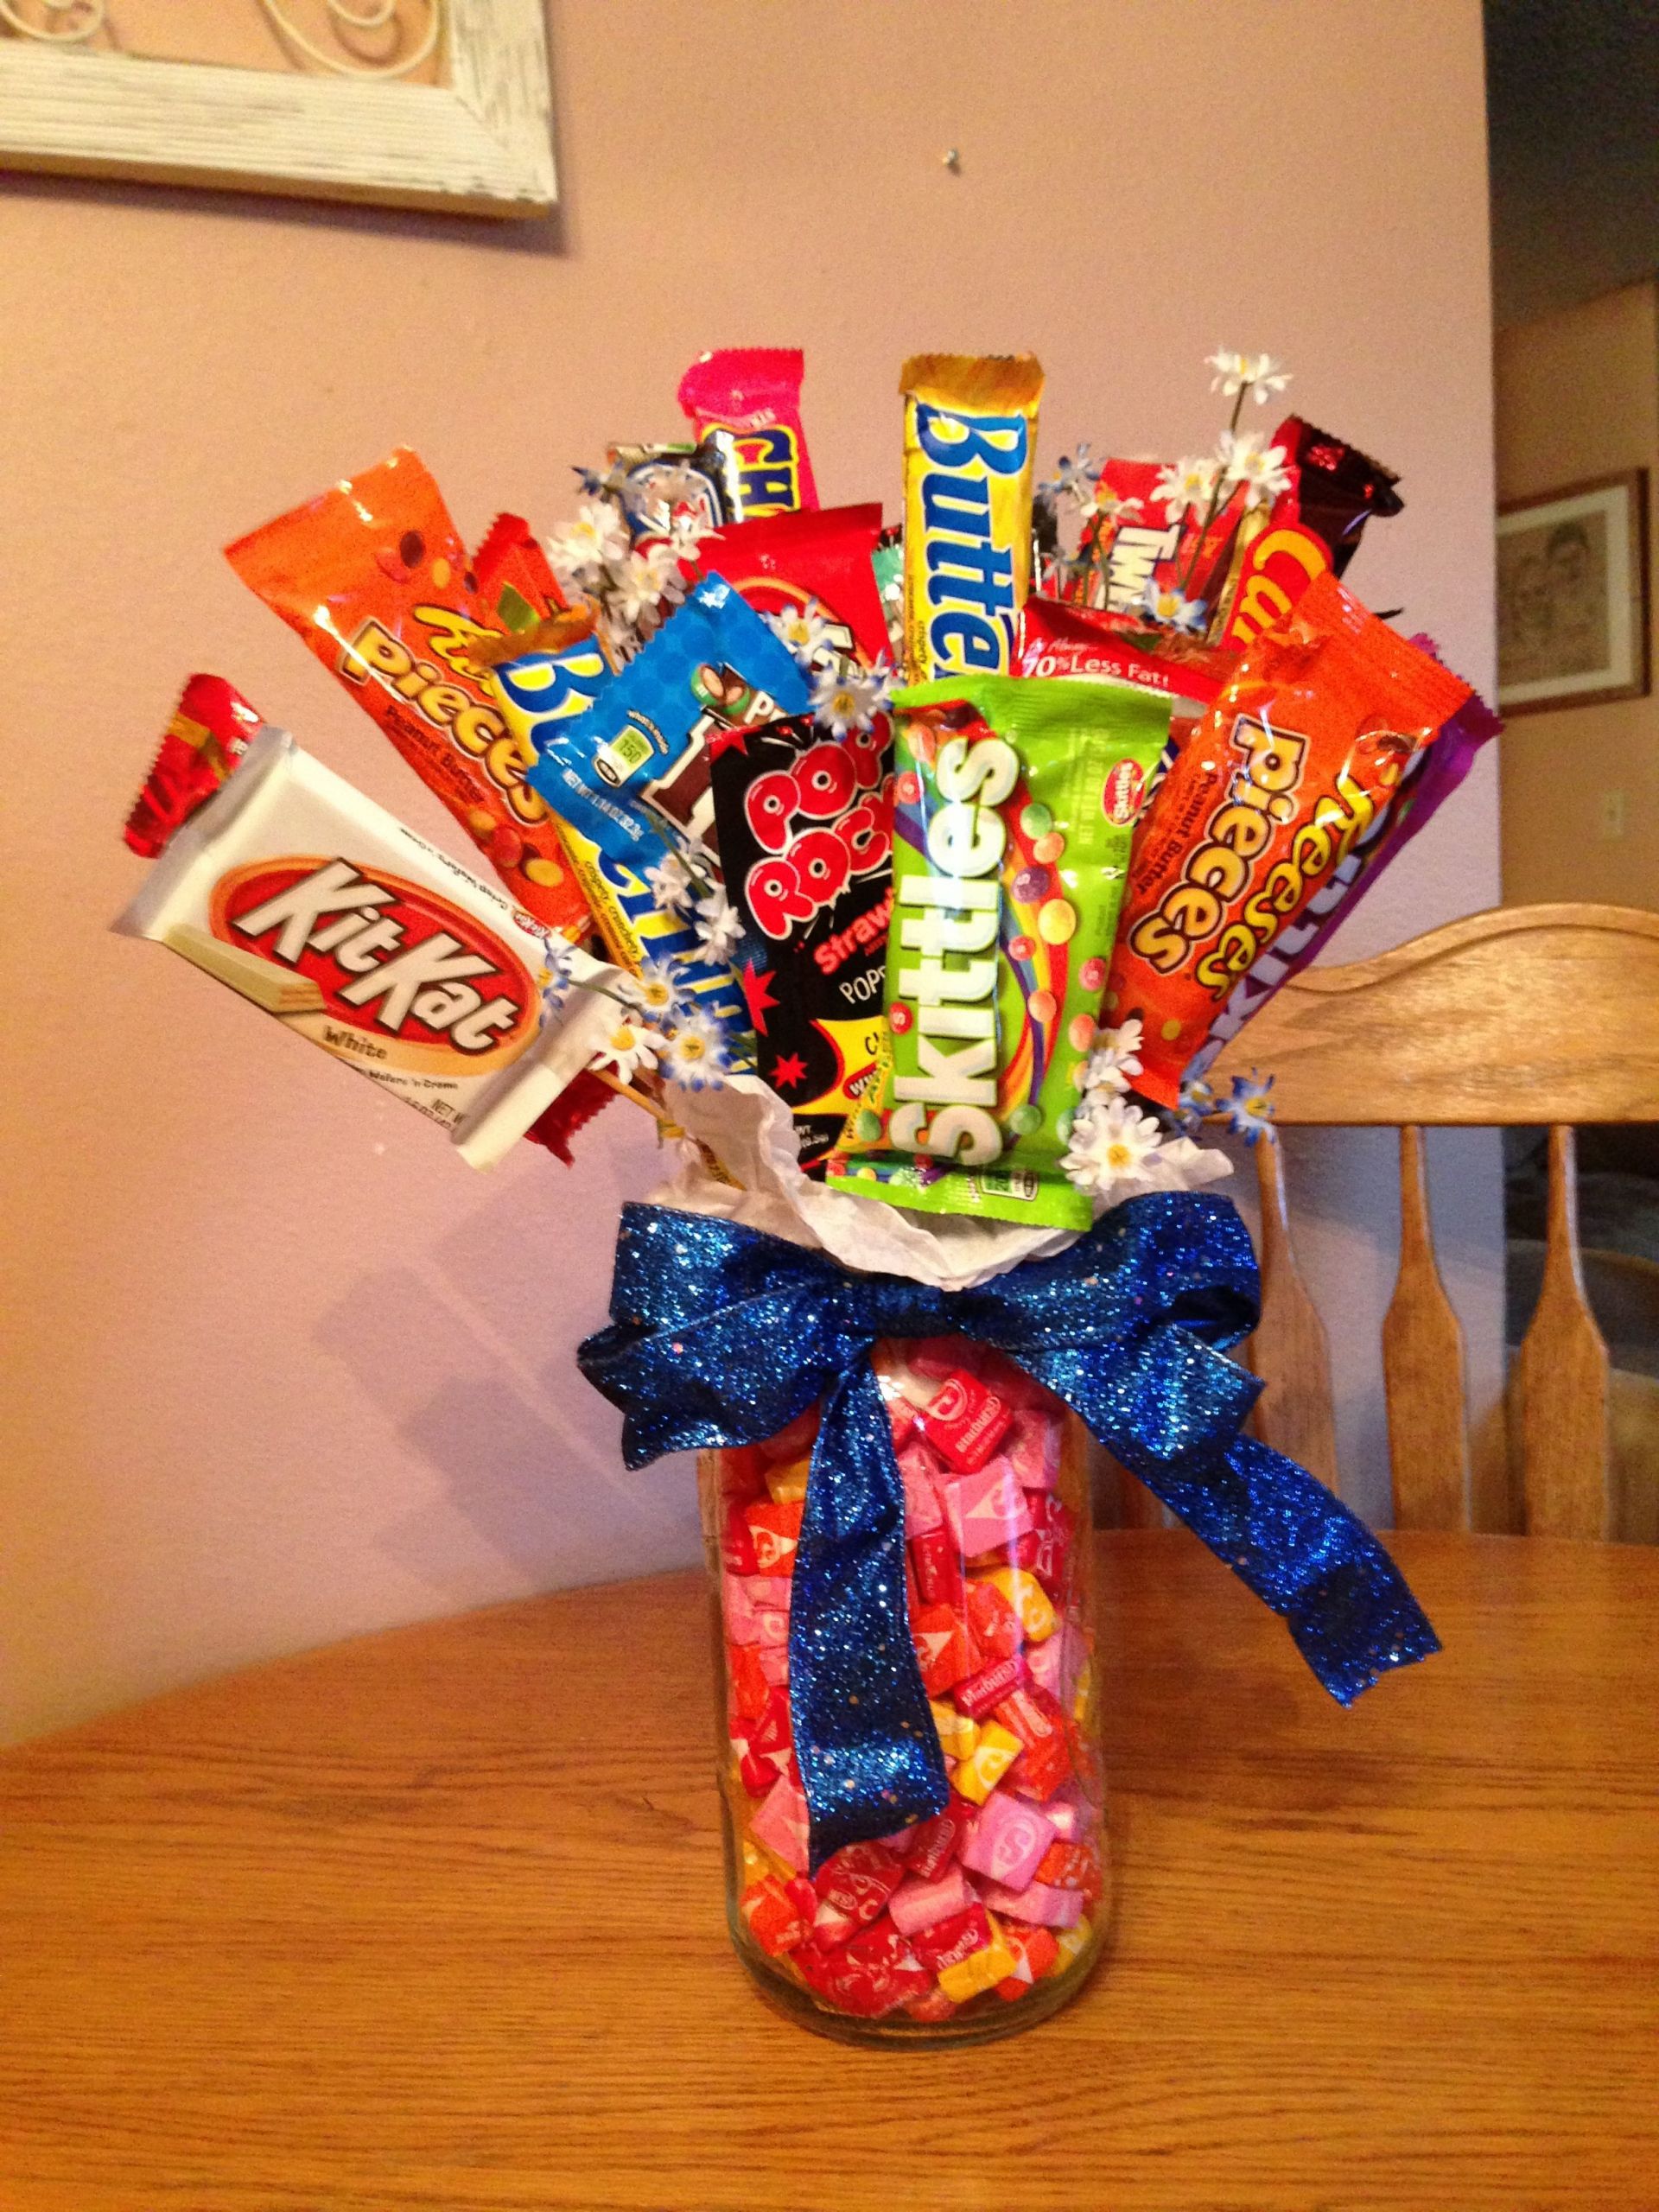 Graduation Gift Ideas For Nephew
 Candy bouquet for my nephew’s graduation